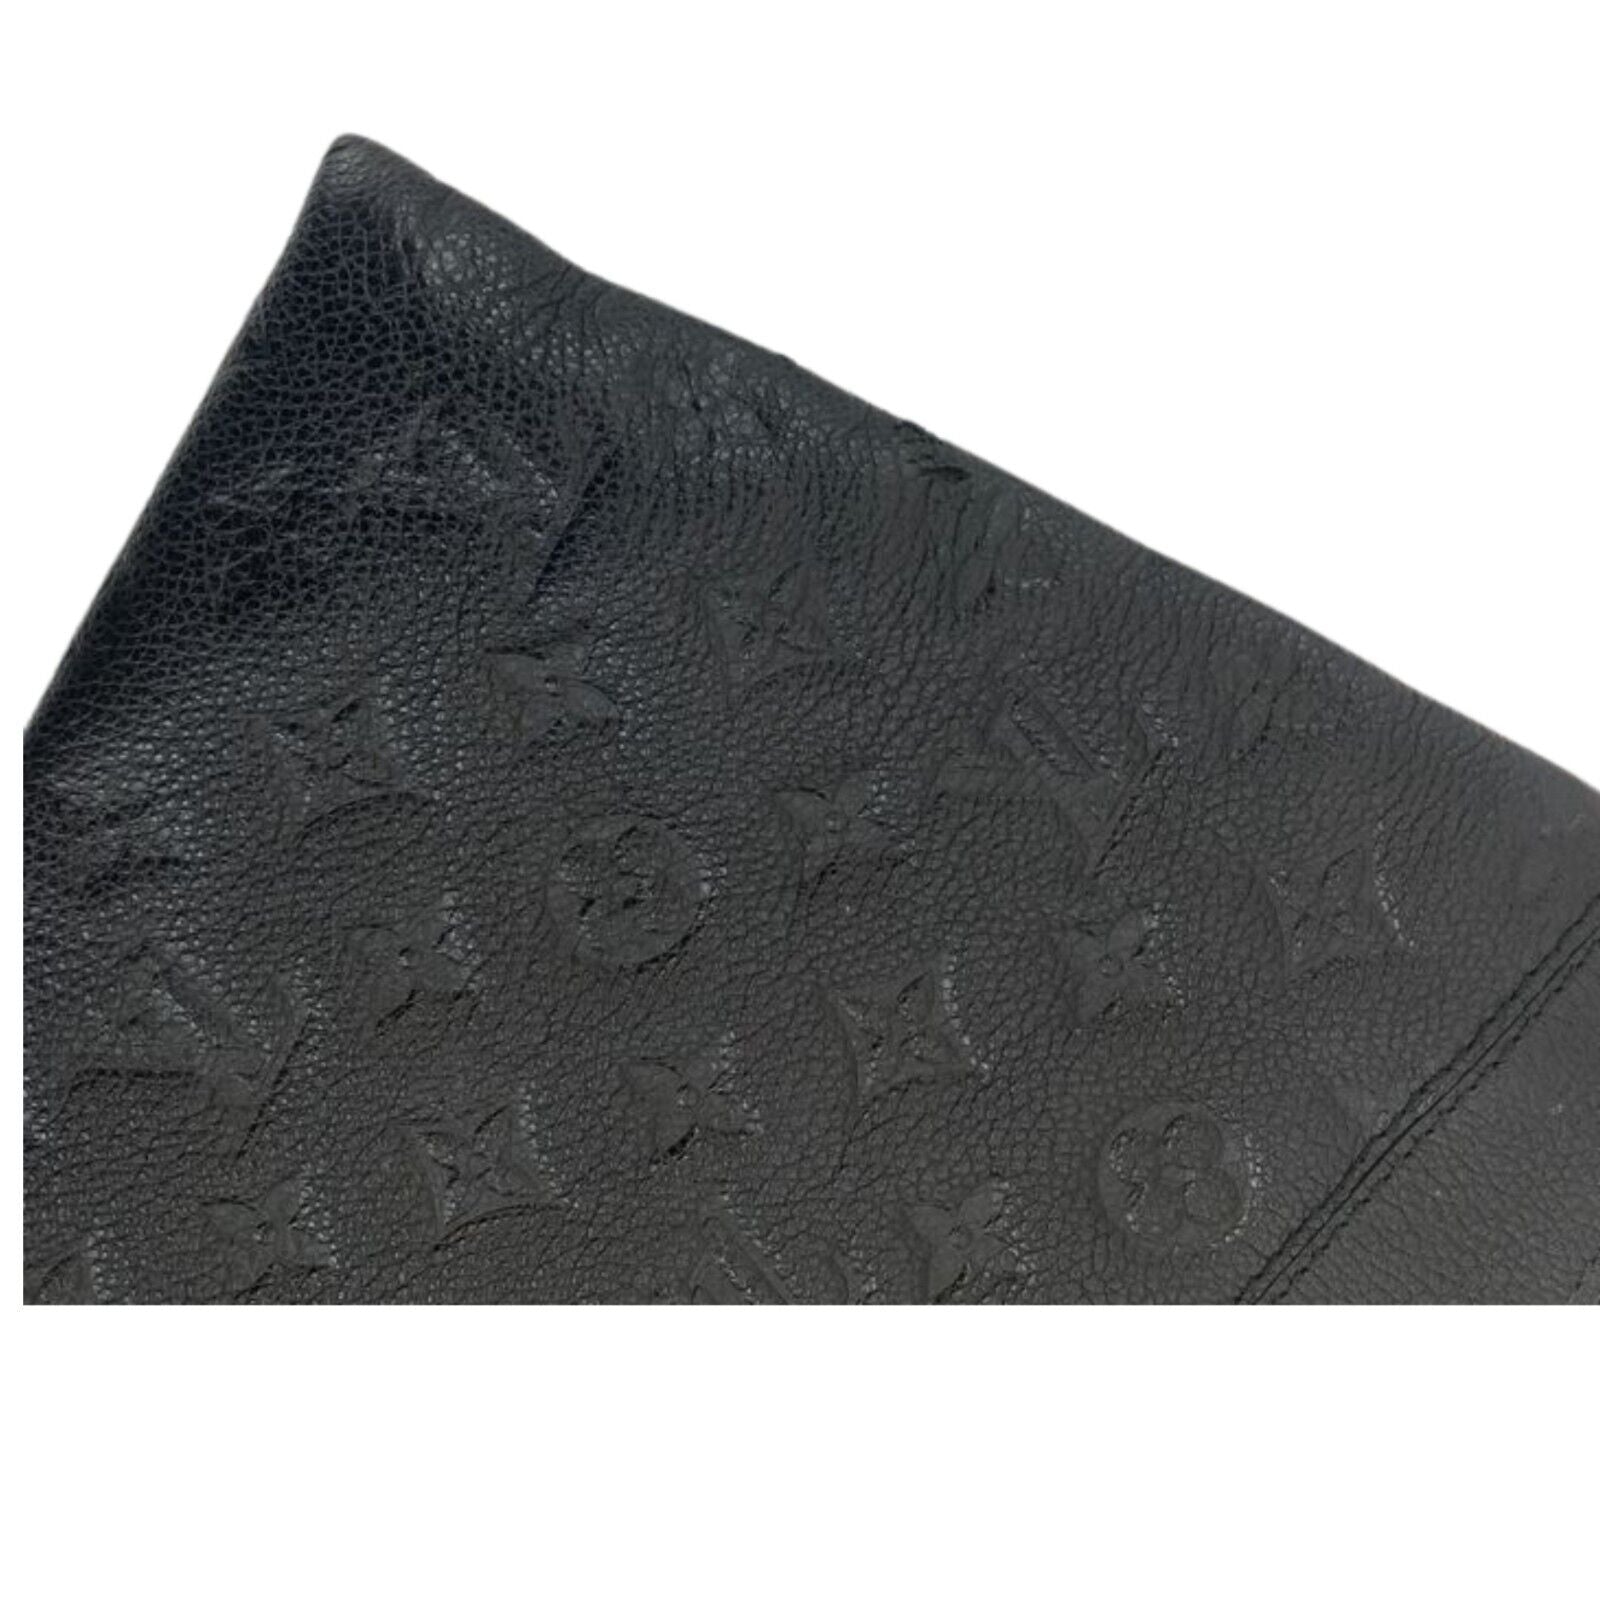 Louis Vuitton Daily Pouch (Black / Monogram)